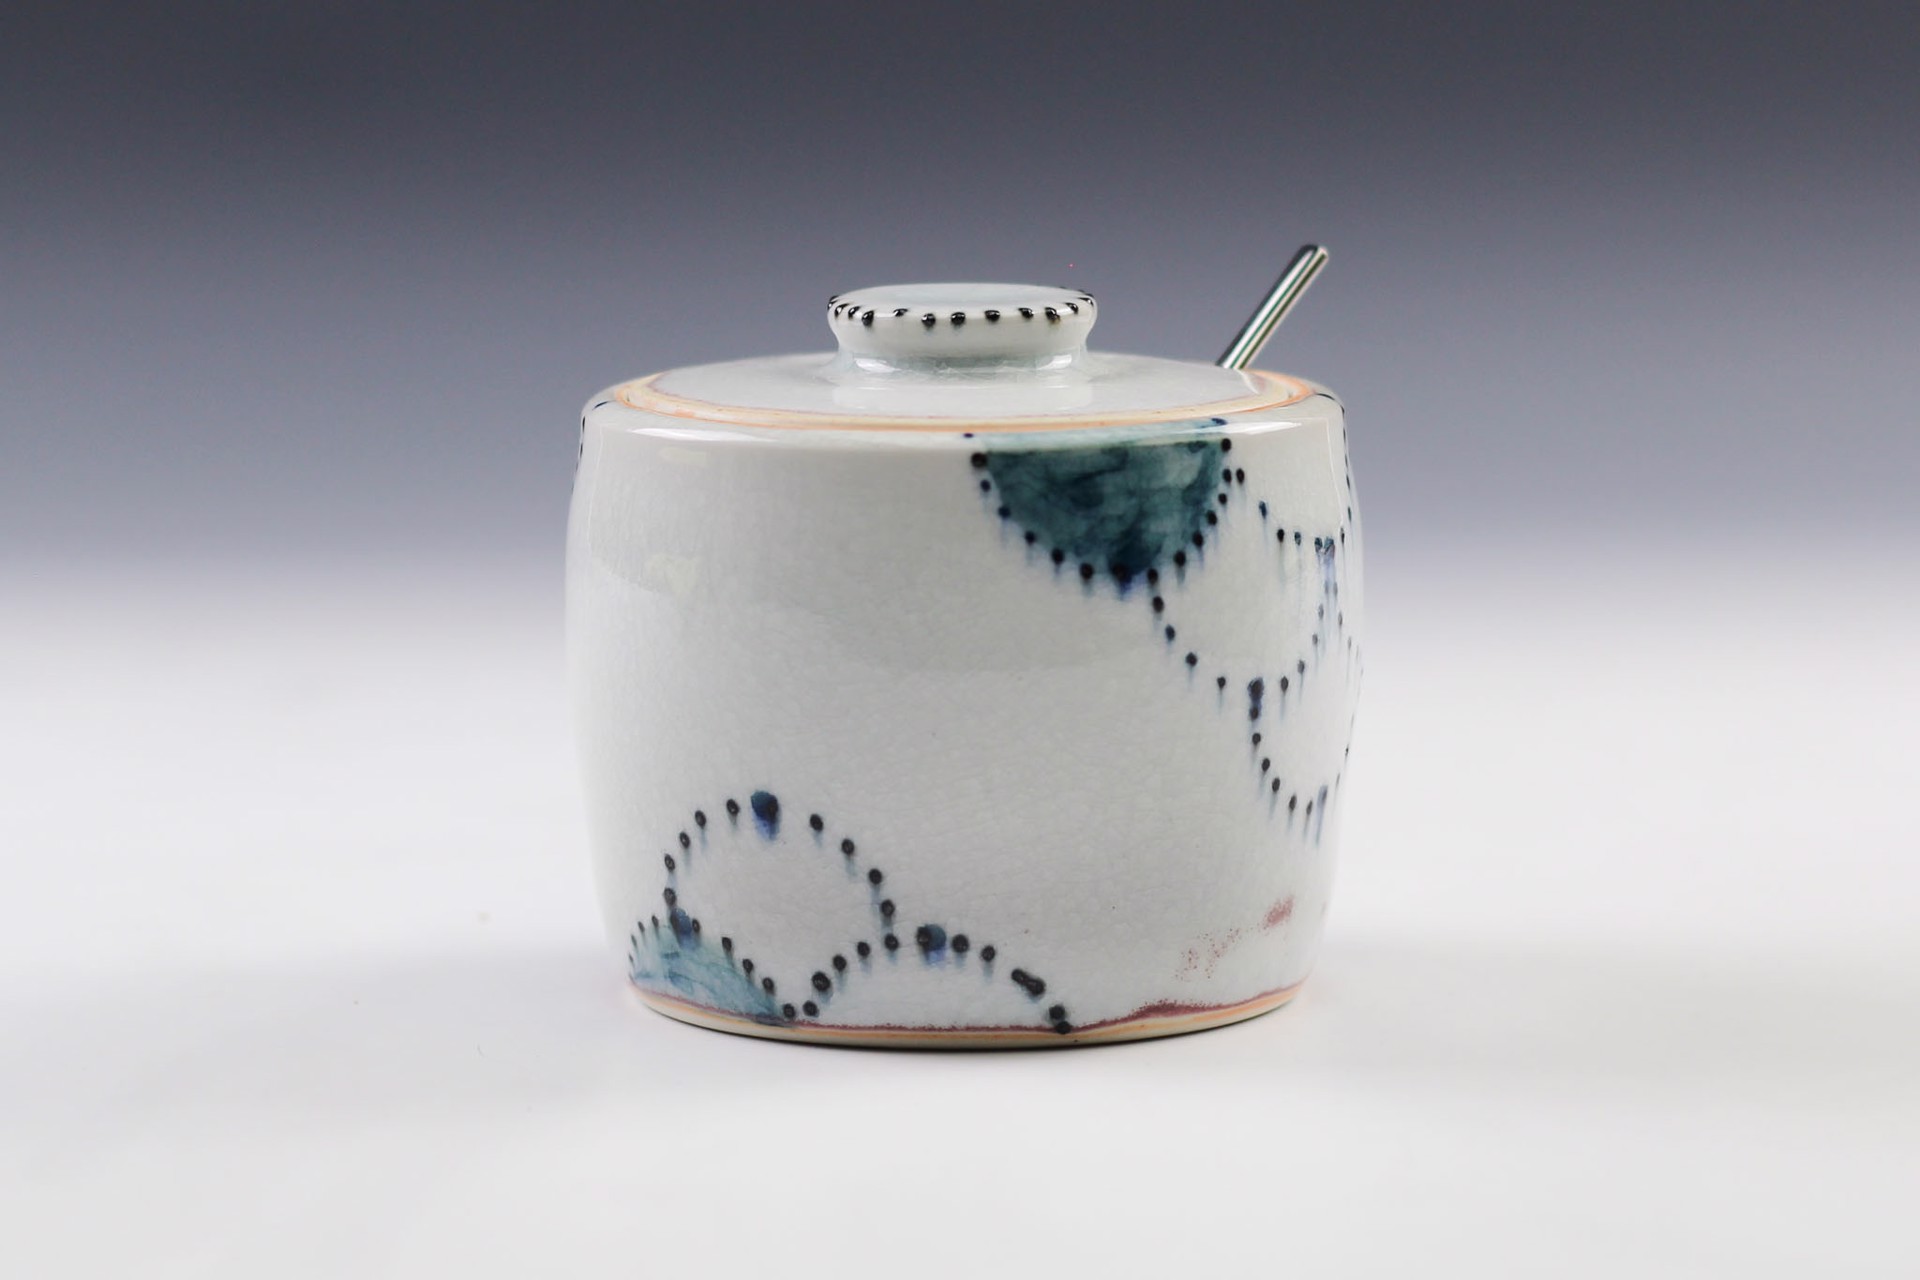 Sugar Jar with Spoon by Juliane Shibata